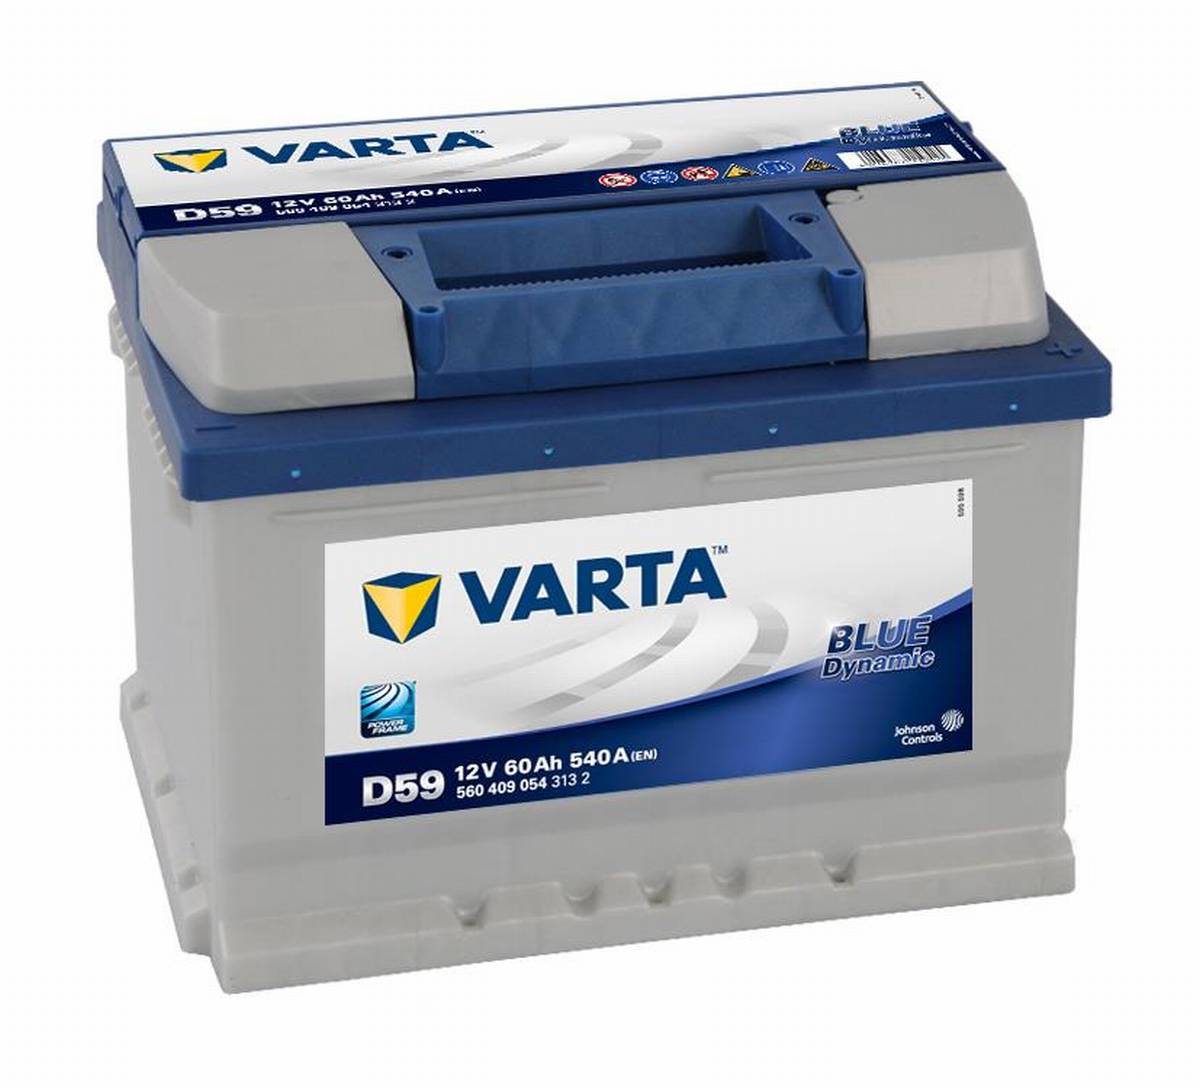 VARTA D59 Blue Dynamic 12V 60Ah 540A batteria auto 560 409 054